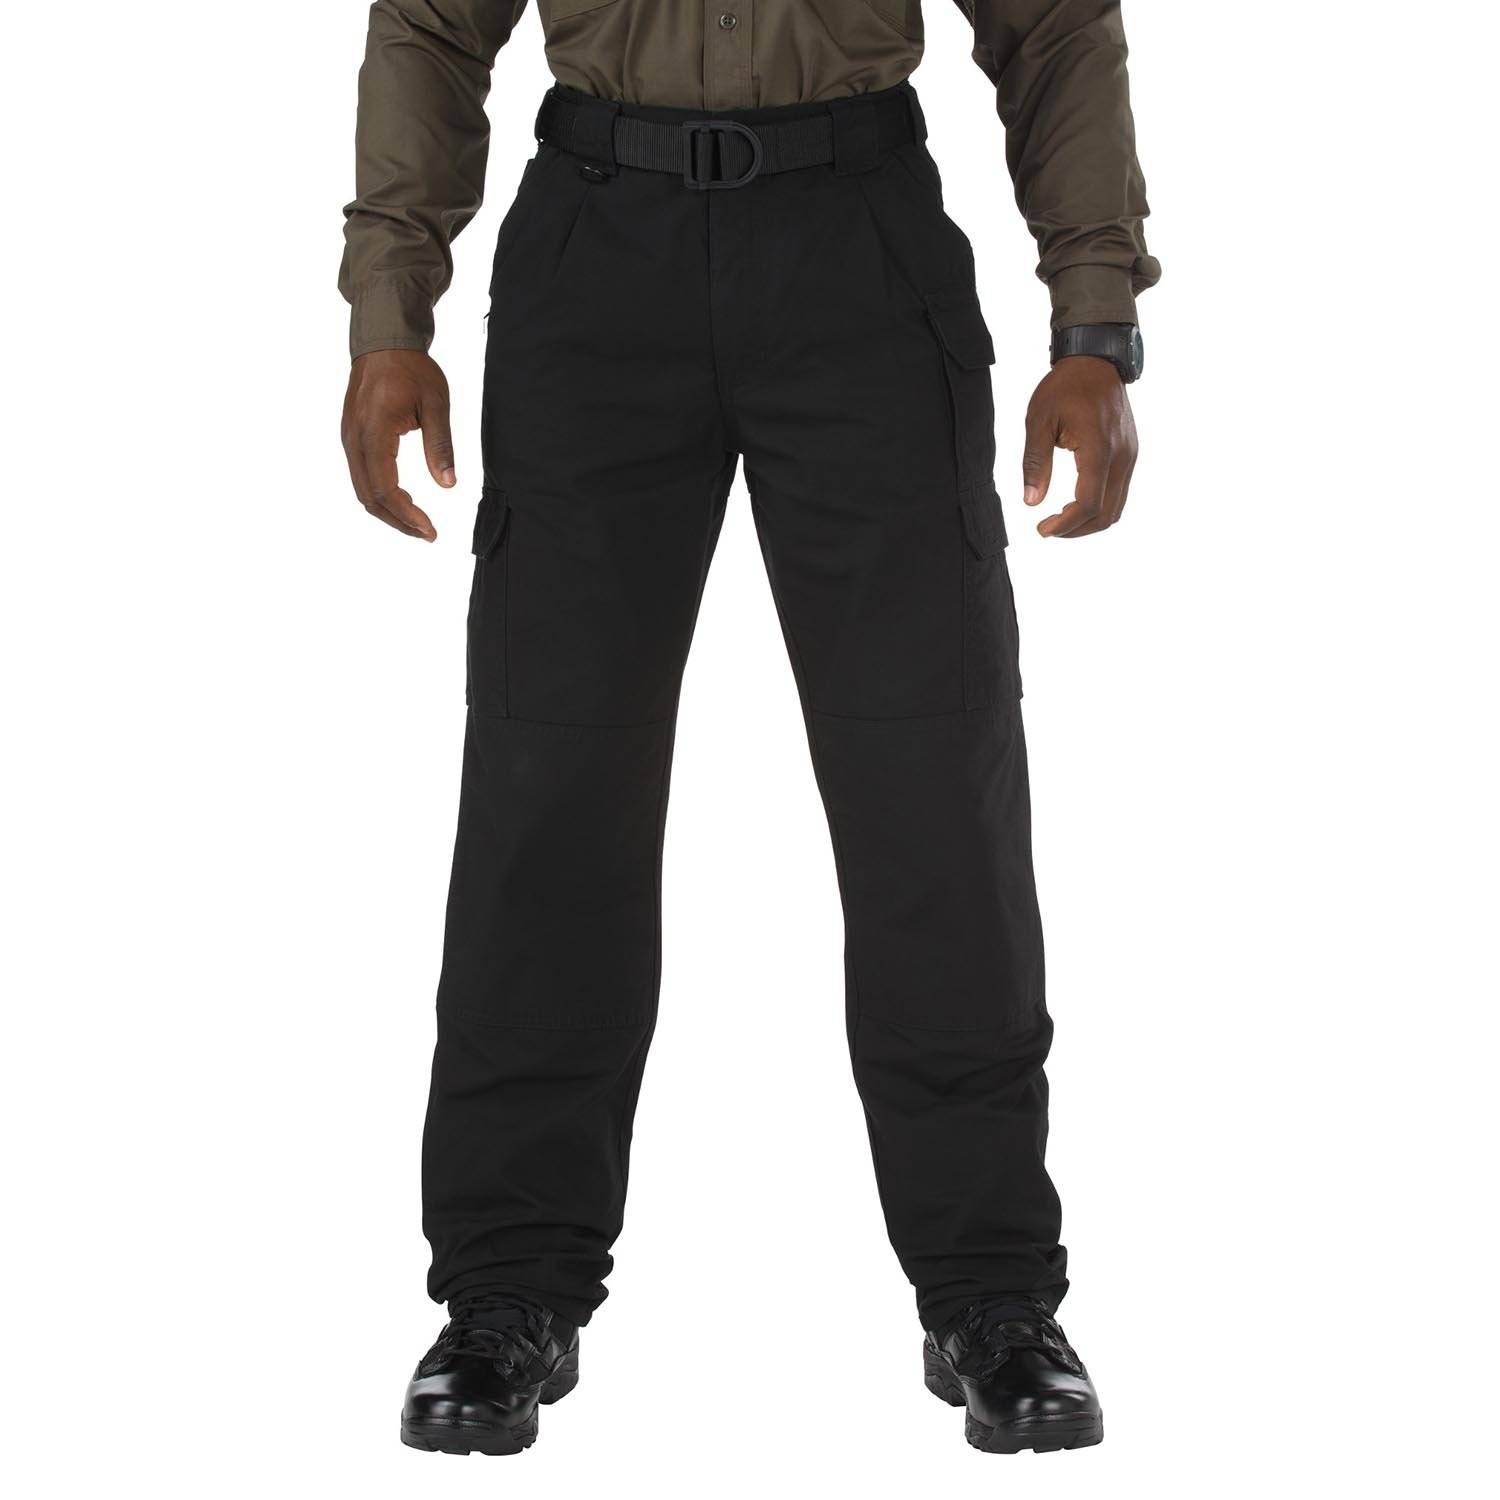 5.11 Tactical Pants- The Tactical Cargo Pant